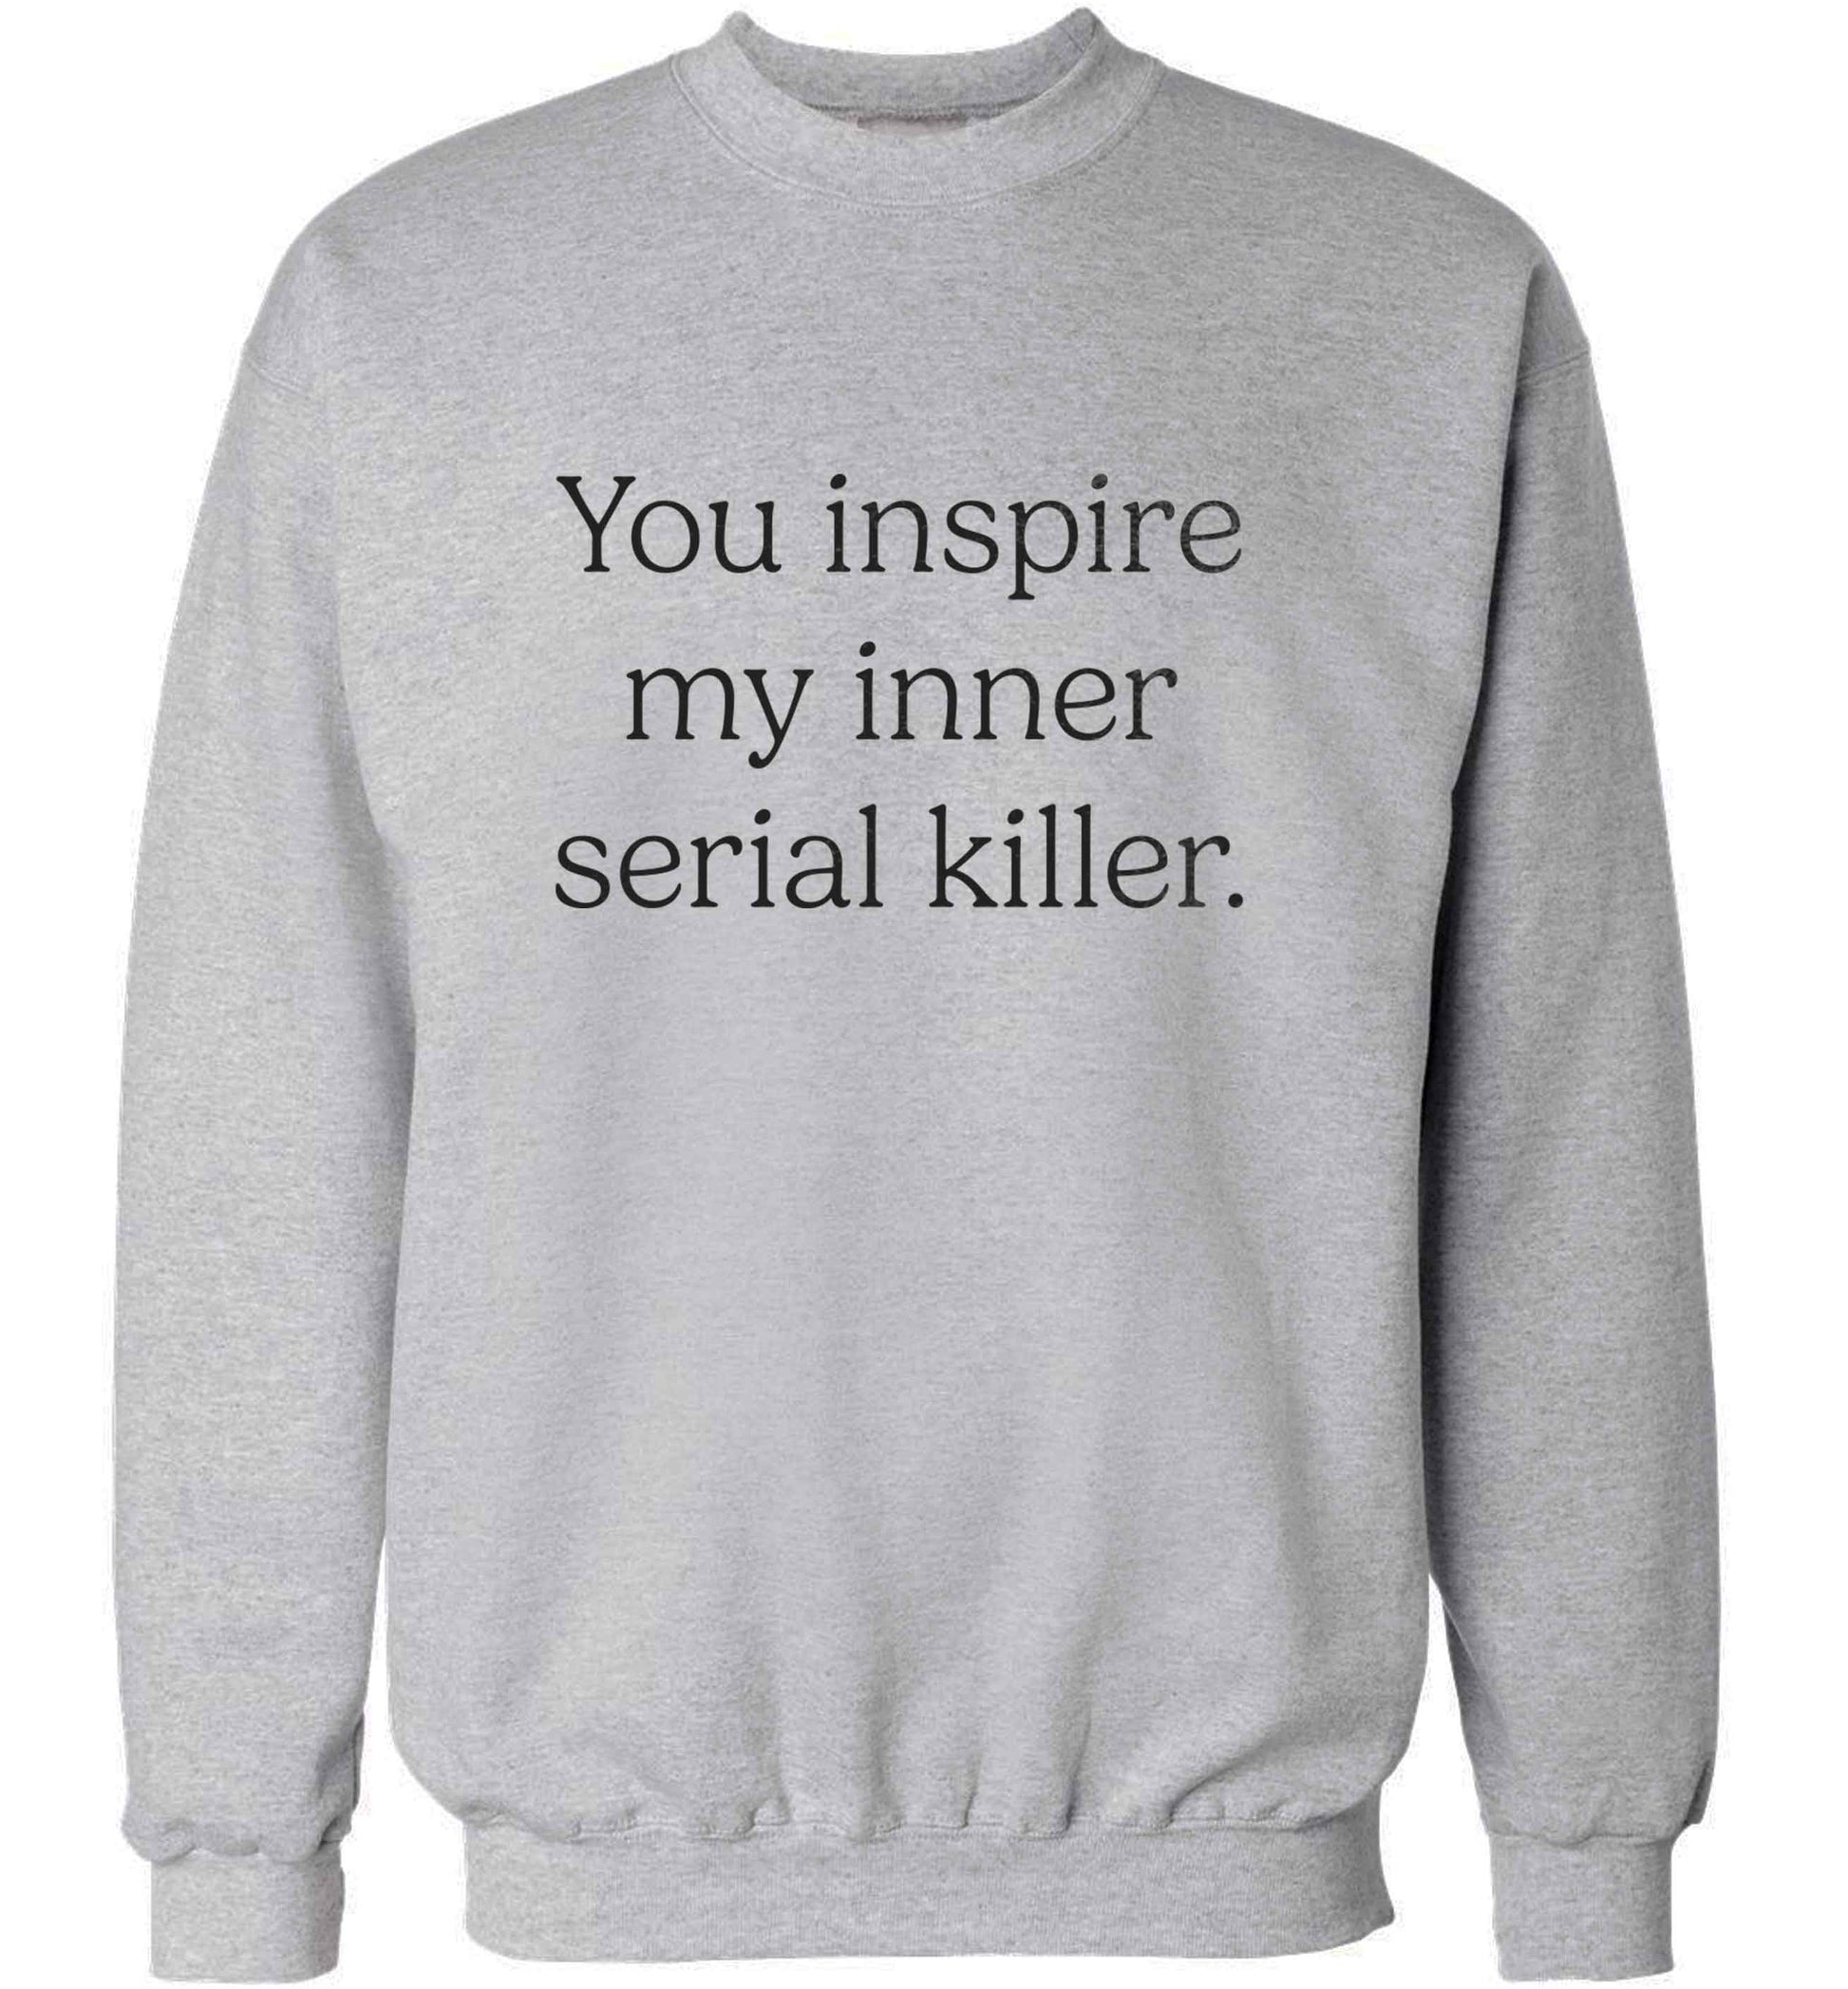 You inspire my inner serial killer Kit adult's unisex grey sweater 2XL